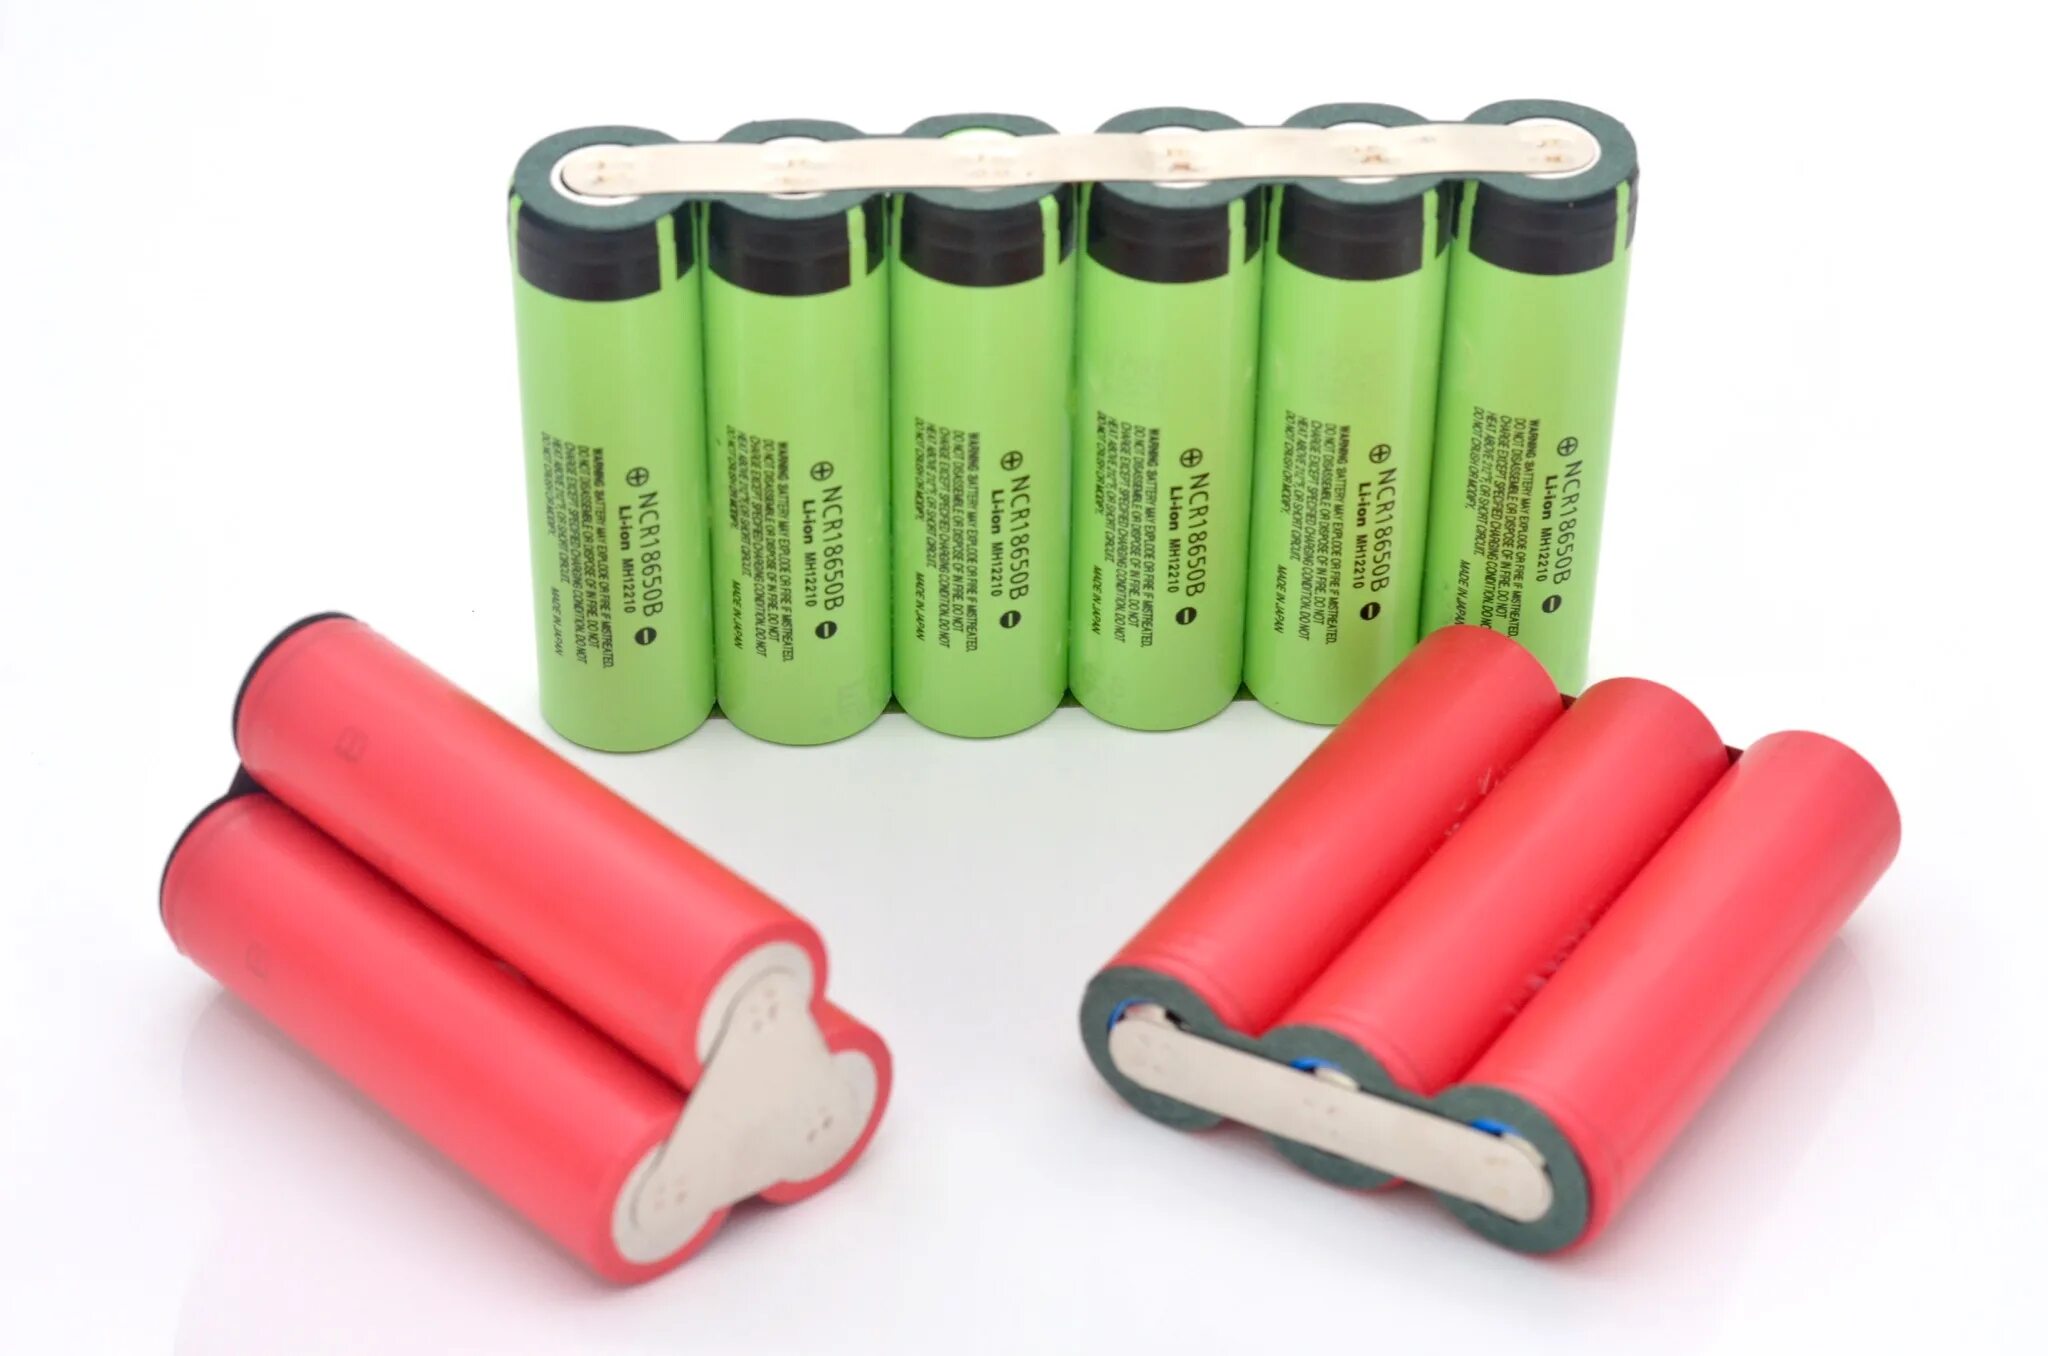 Www batteries com. DIY Battery. Battery y7410. DIY Battery Pack: choosing. Kit Batt.